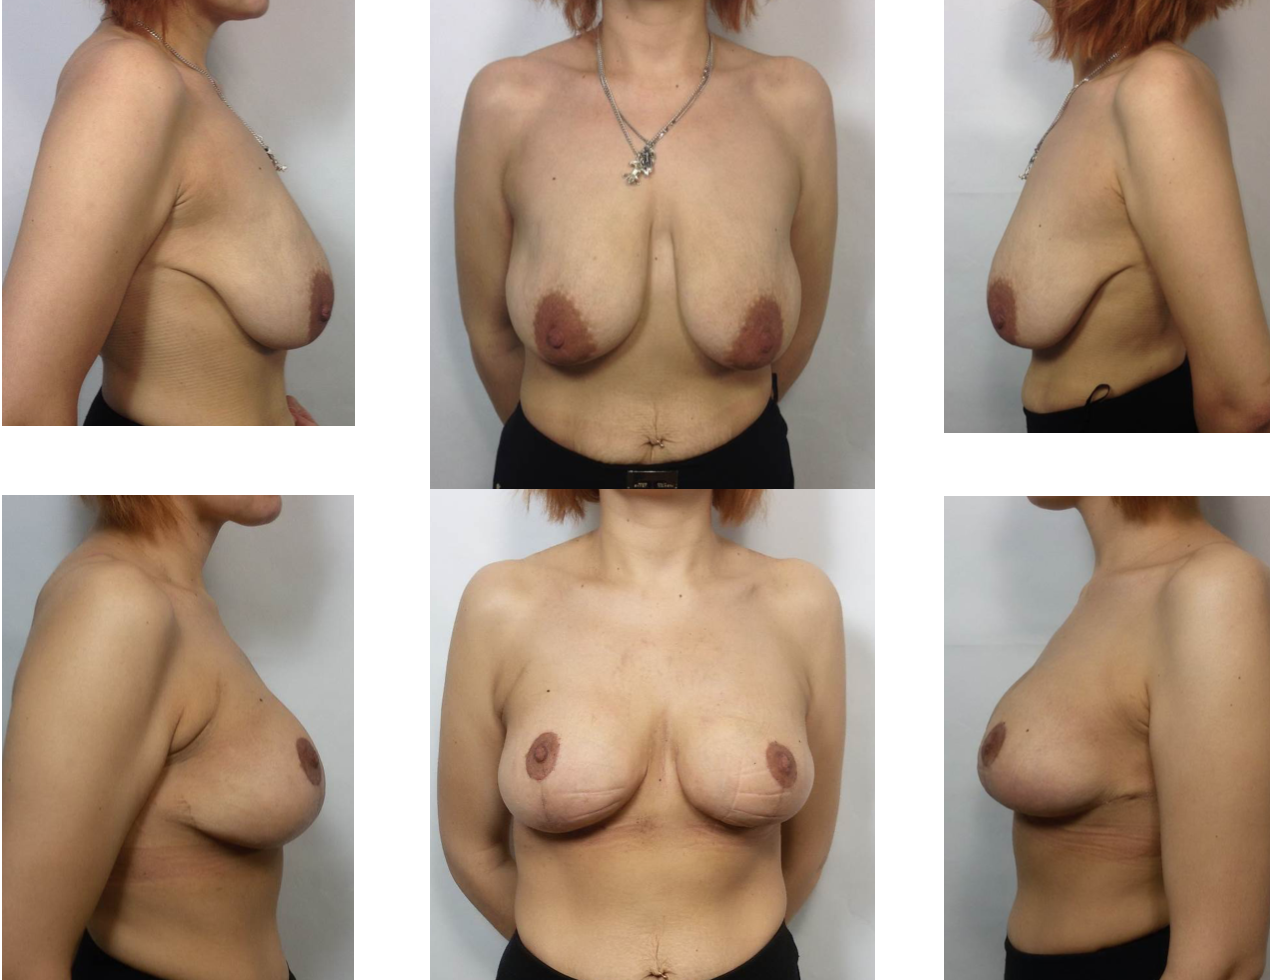 разновидности груди женщин фото 61